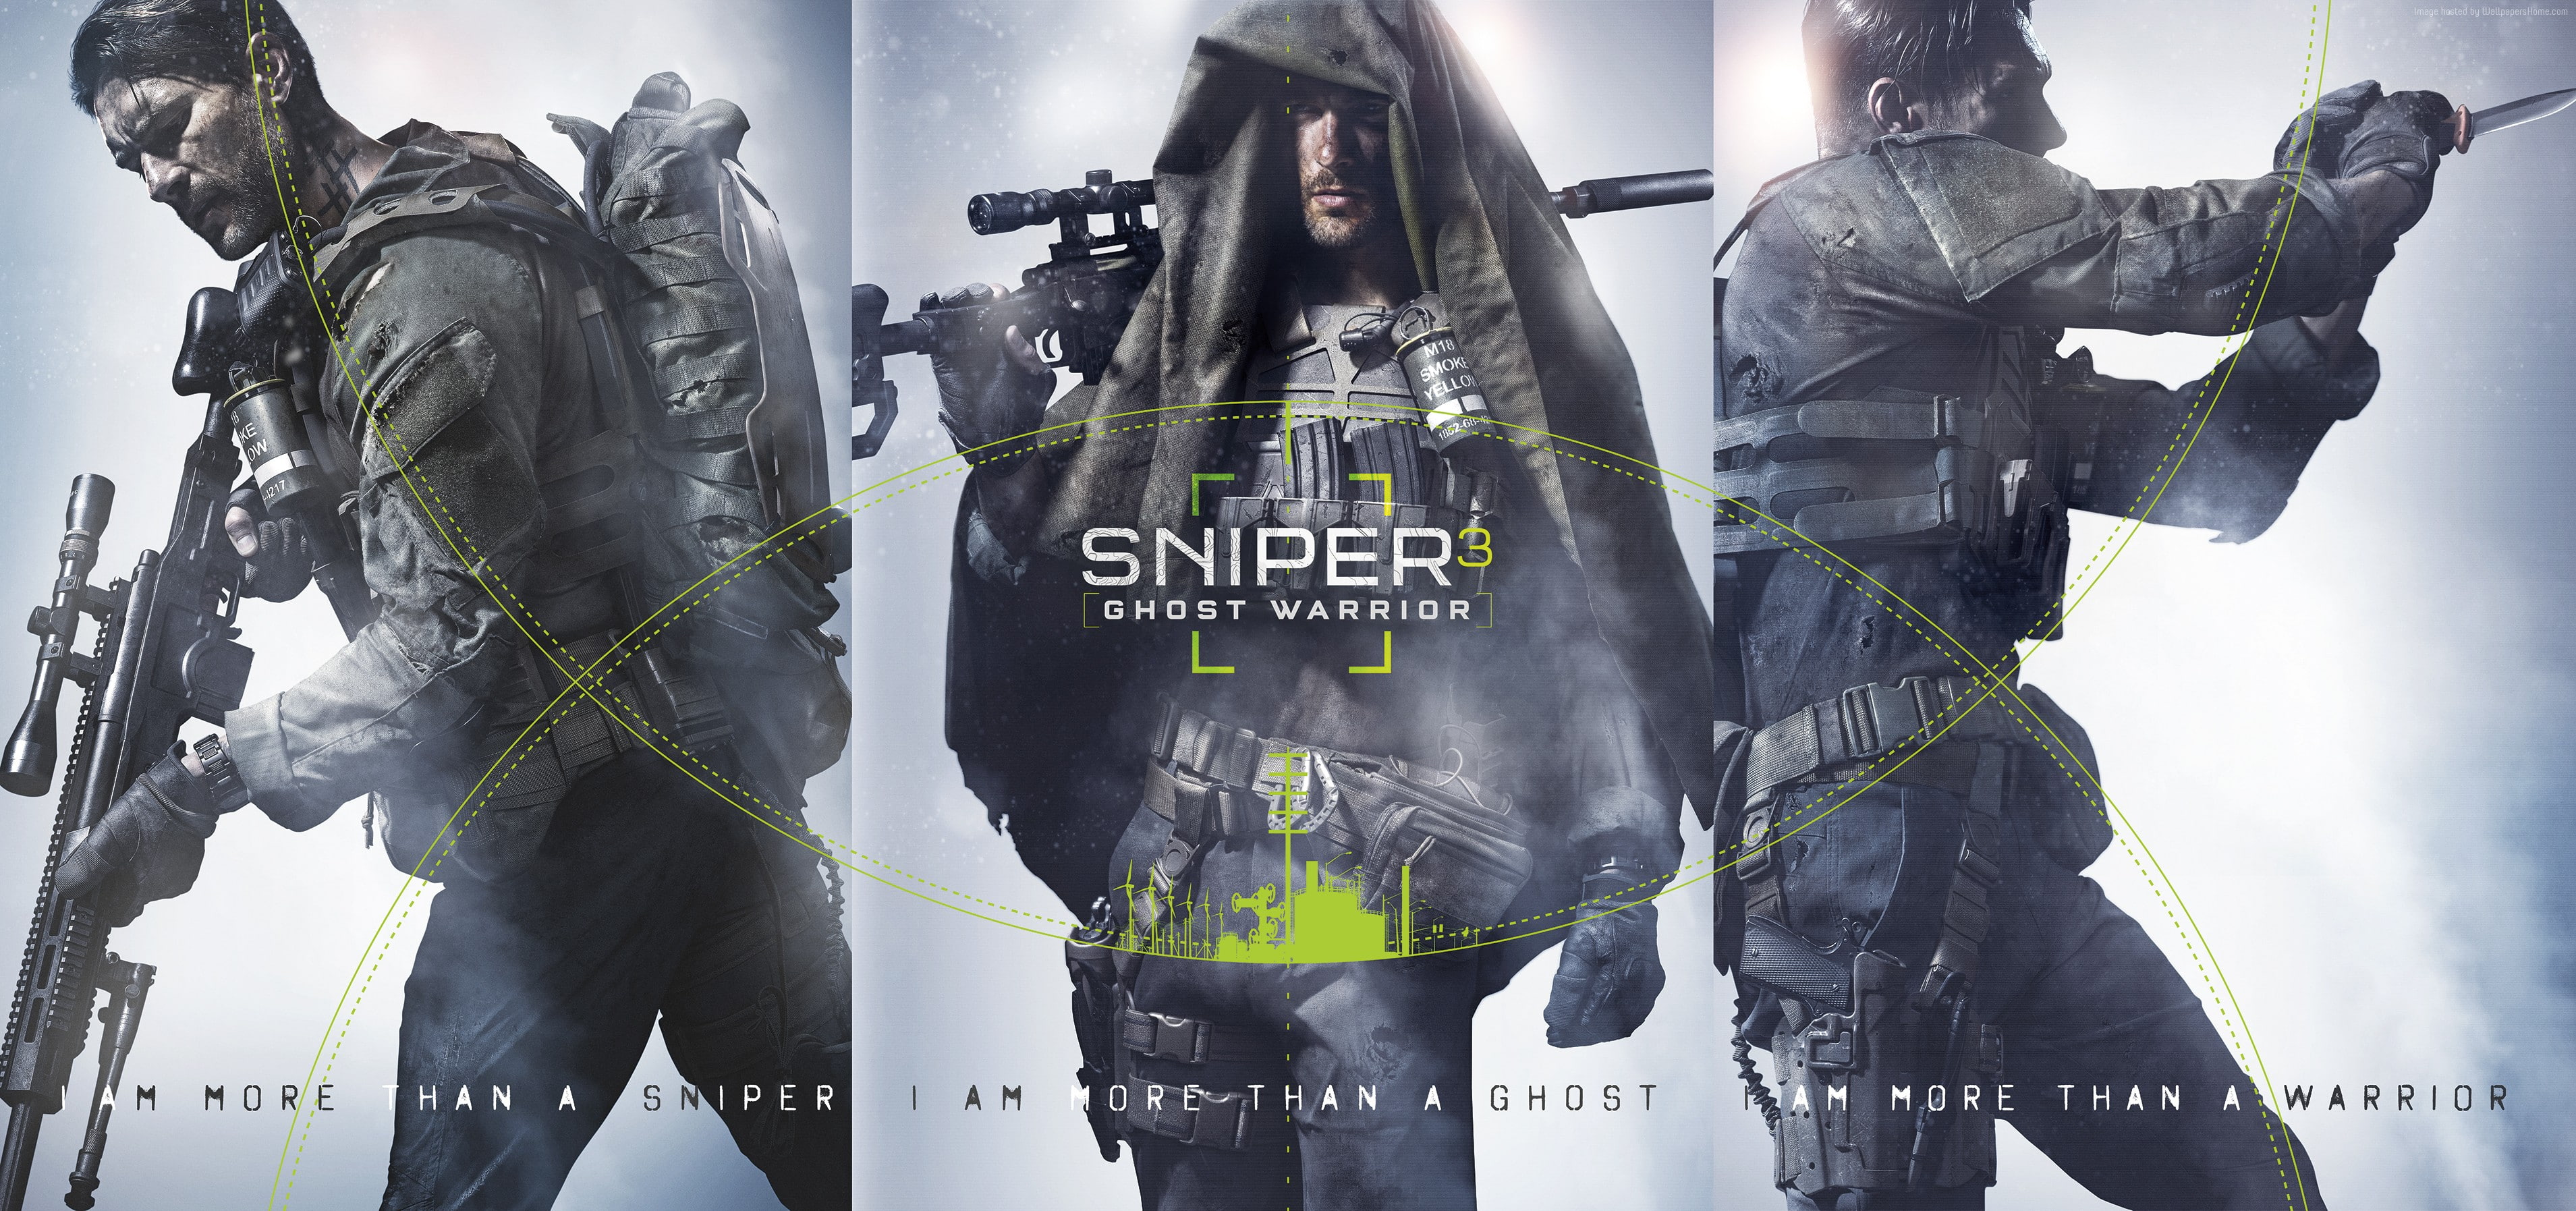 Sniper: Ghost Warrior 3, best games, shooter